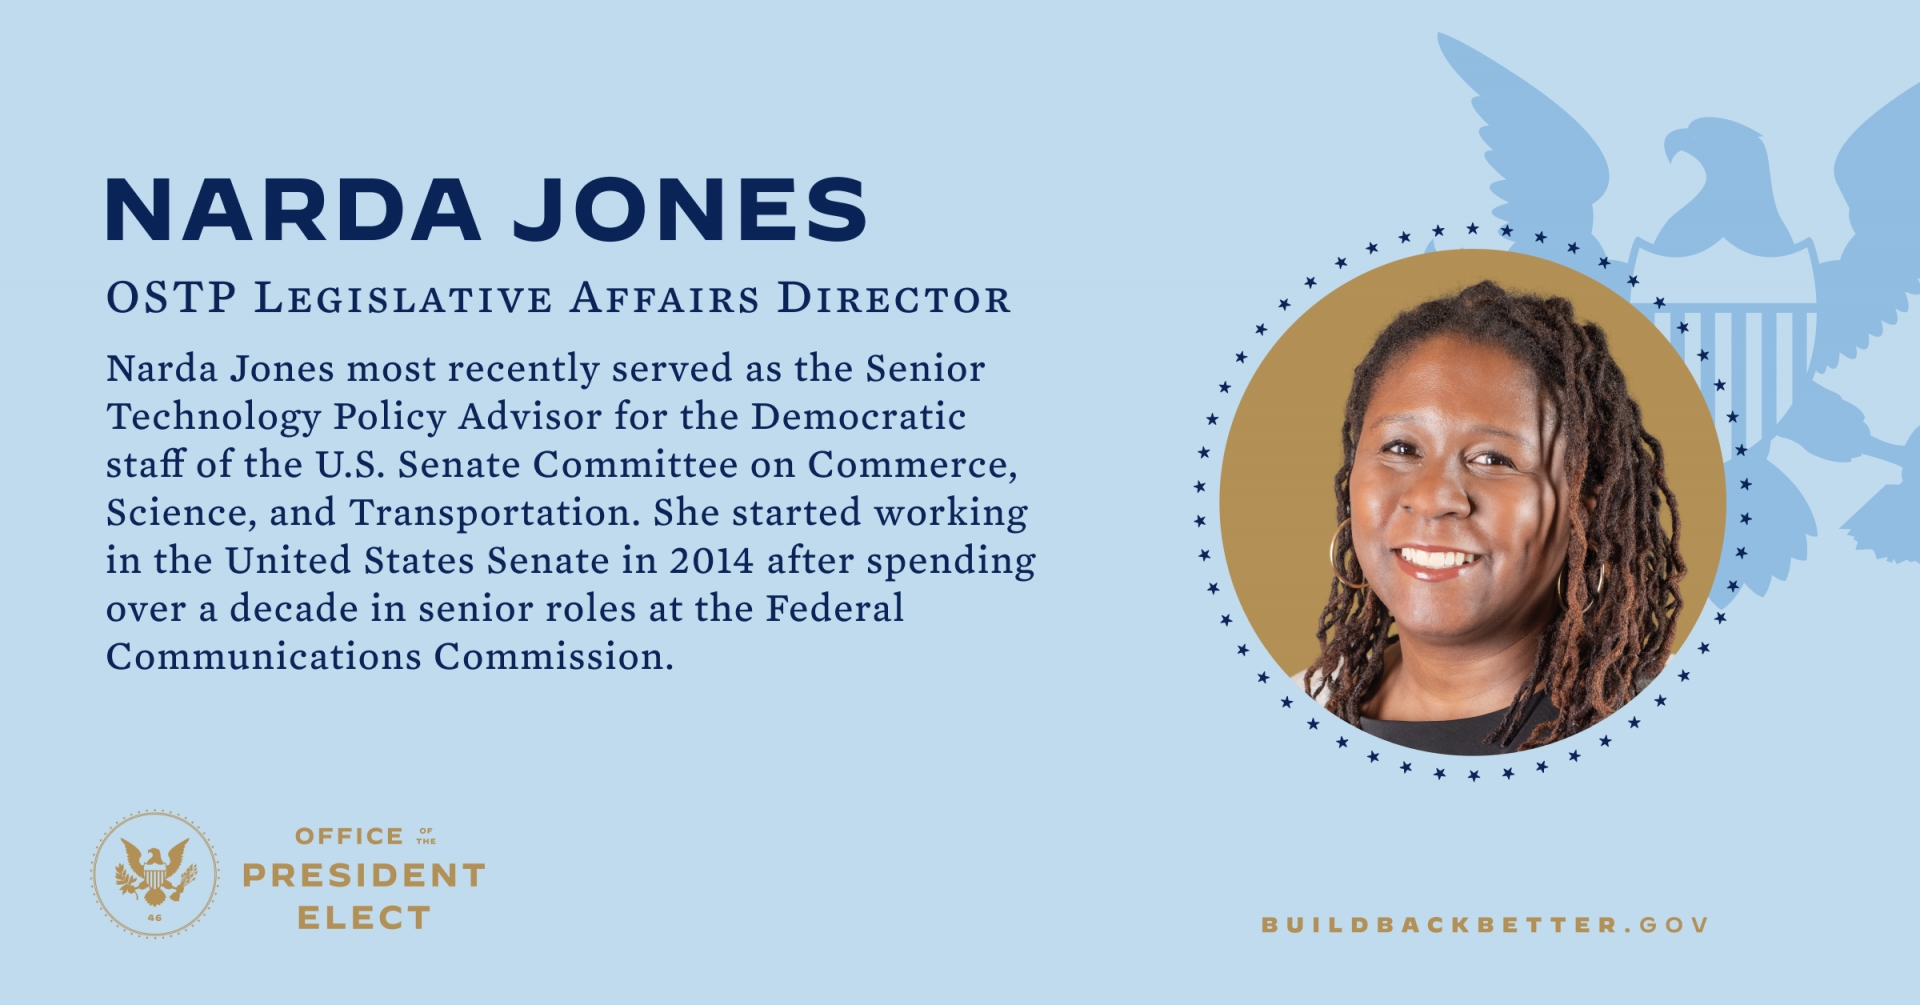 Who is Narda Jones - OSTP Legislative Affairs Director nominees: Biography, Career, Education